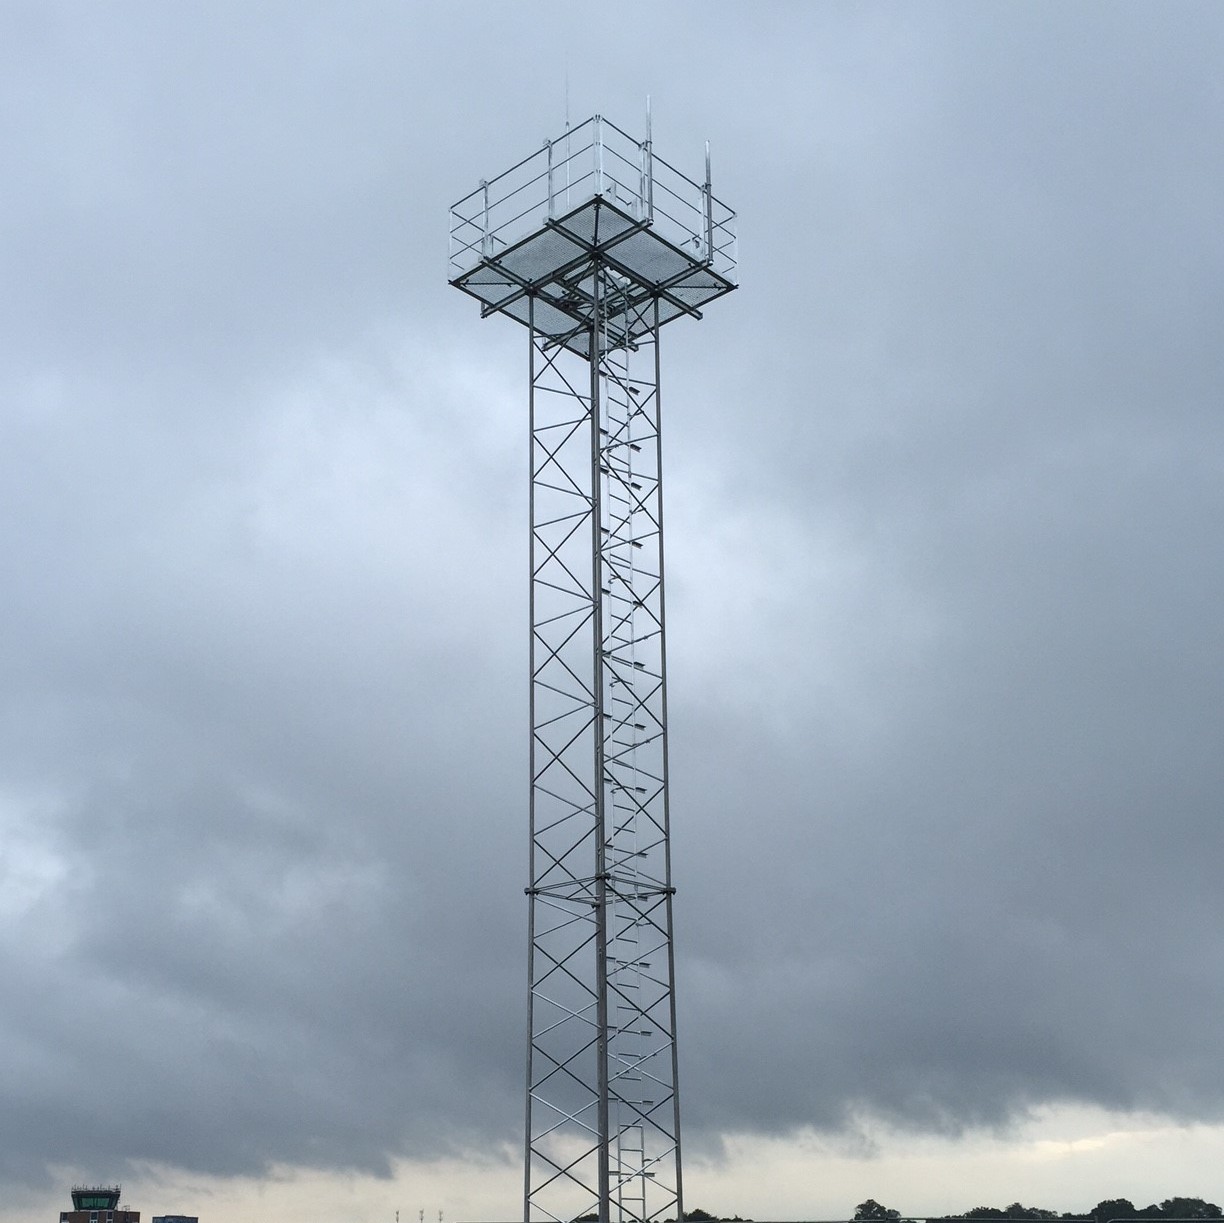 15m observation Tower by CarlC at RAF Northolt